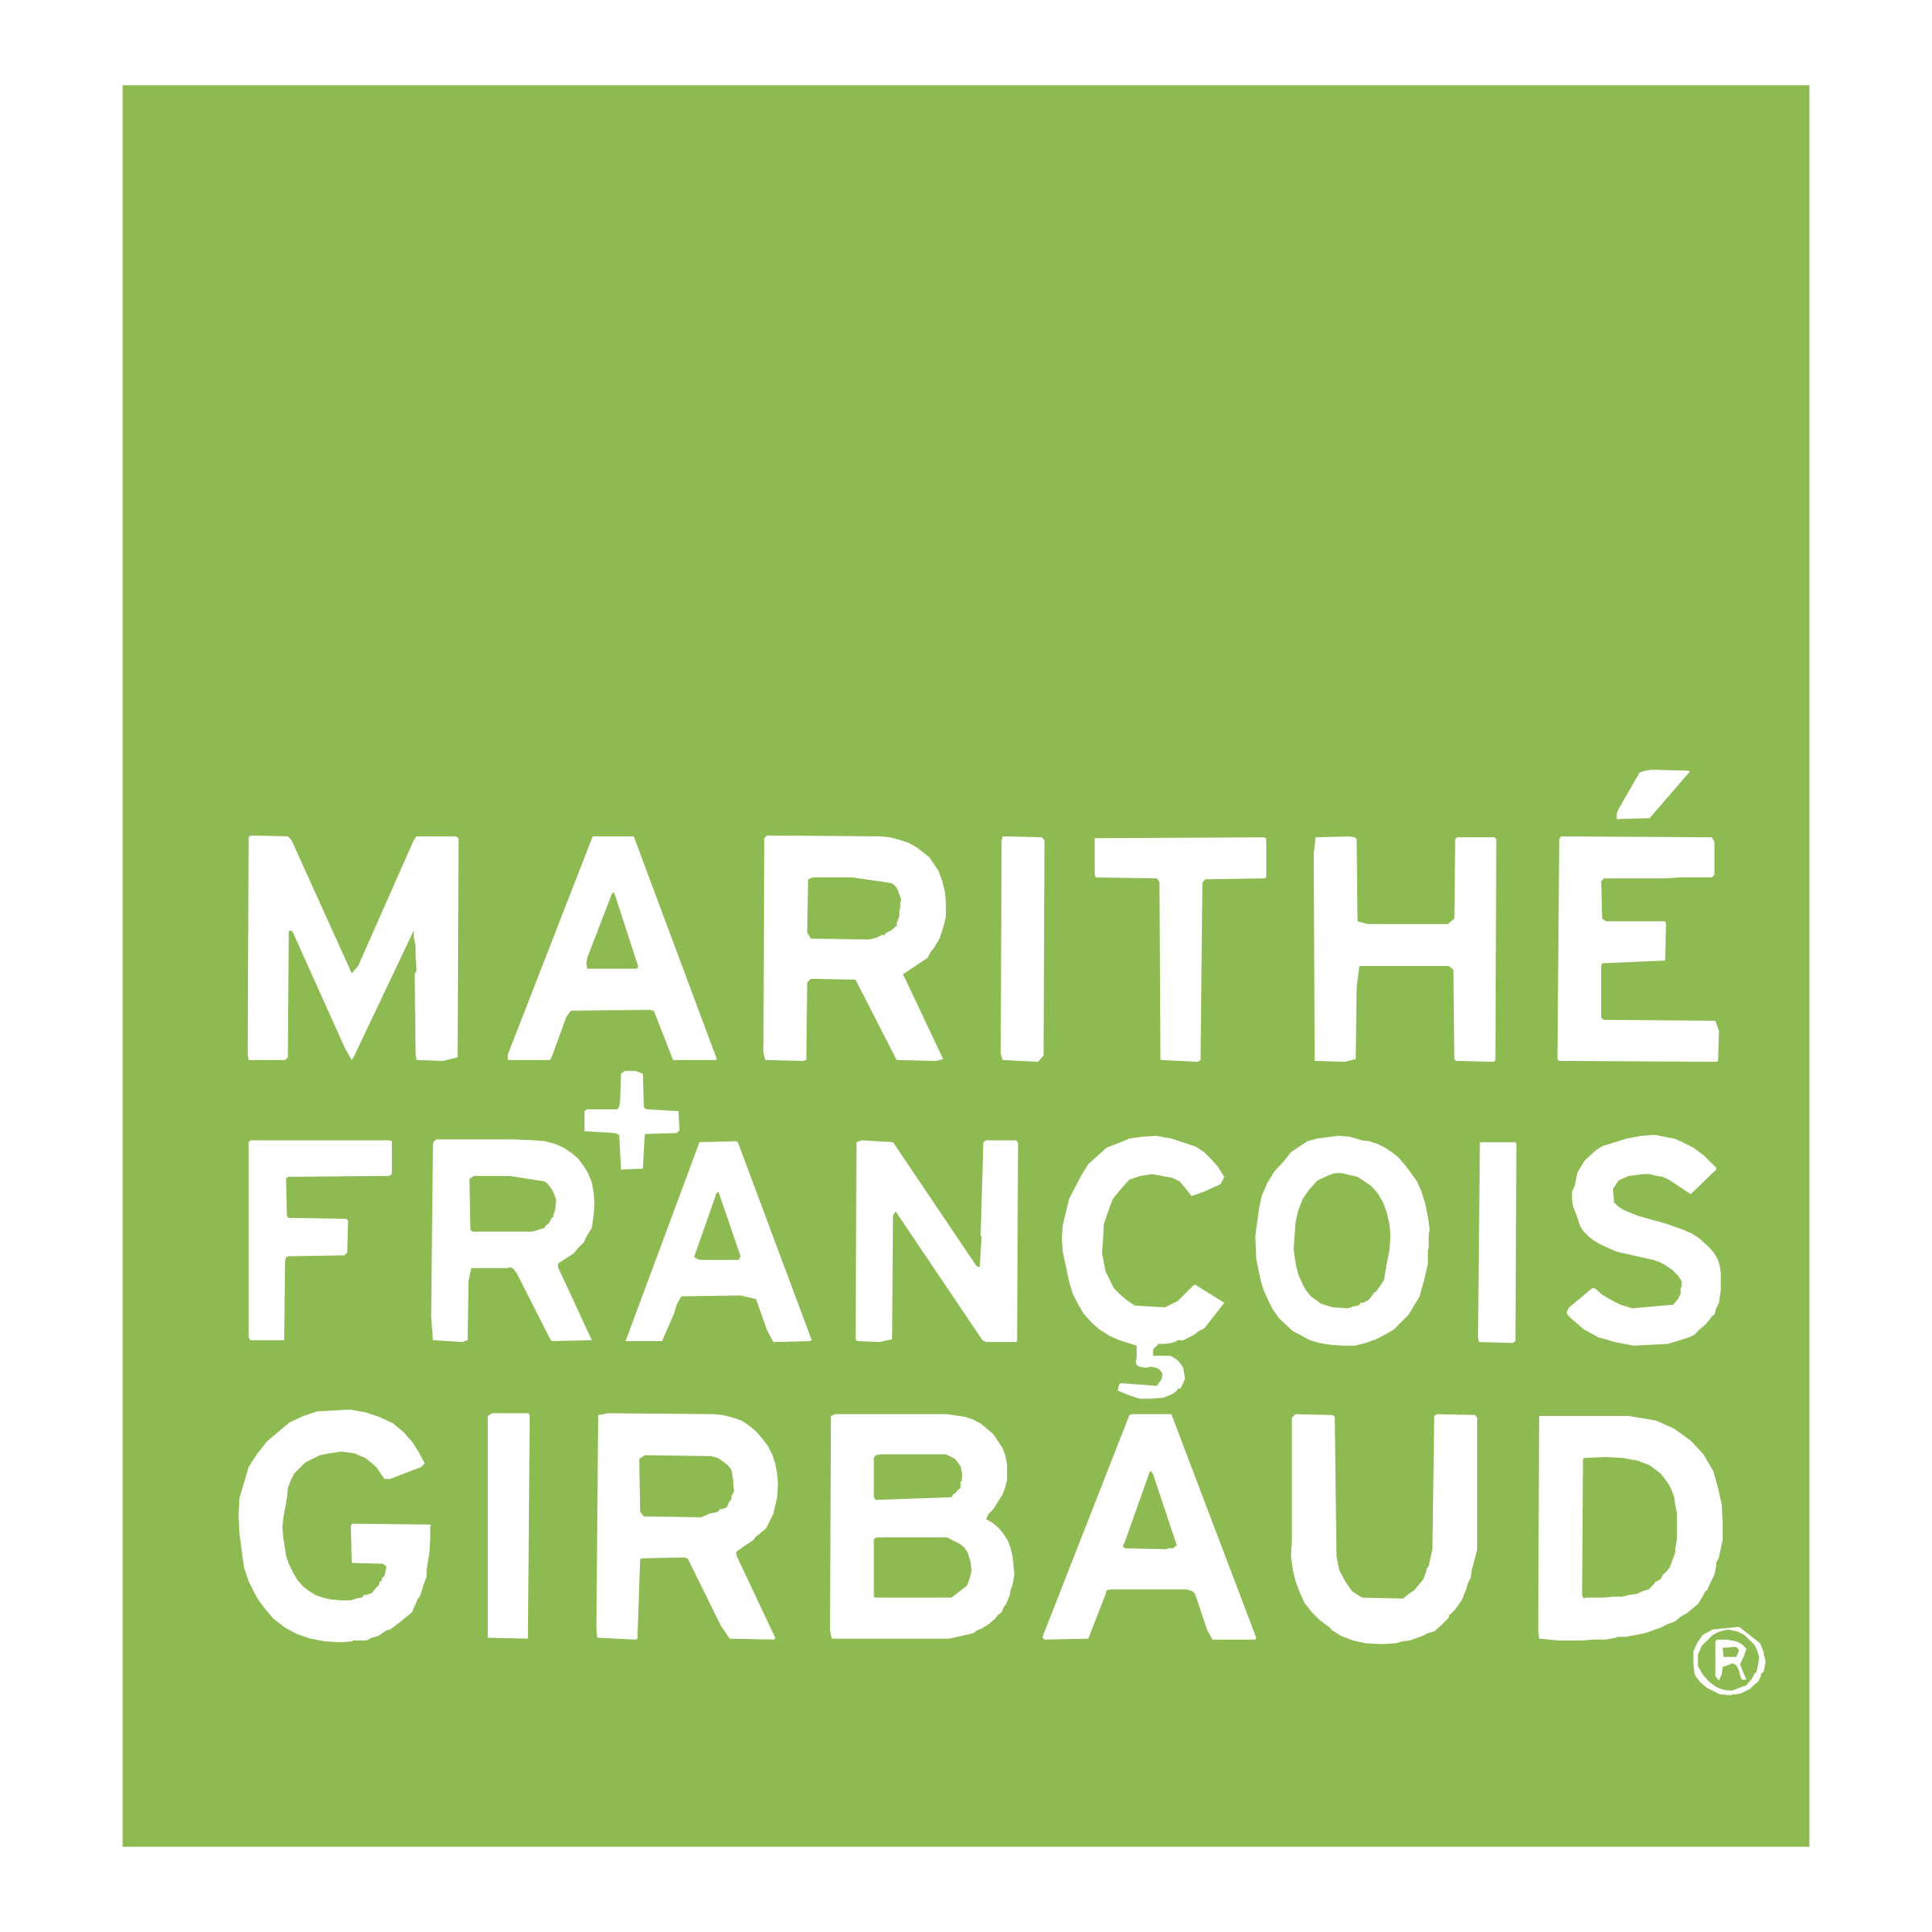 Girbaud Logo - Marithe + Francois Girbaud Logo PNG Transparent & SVG Vector ...